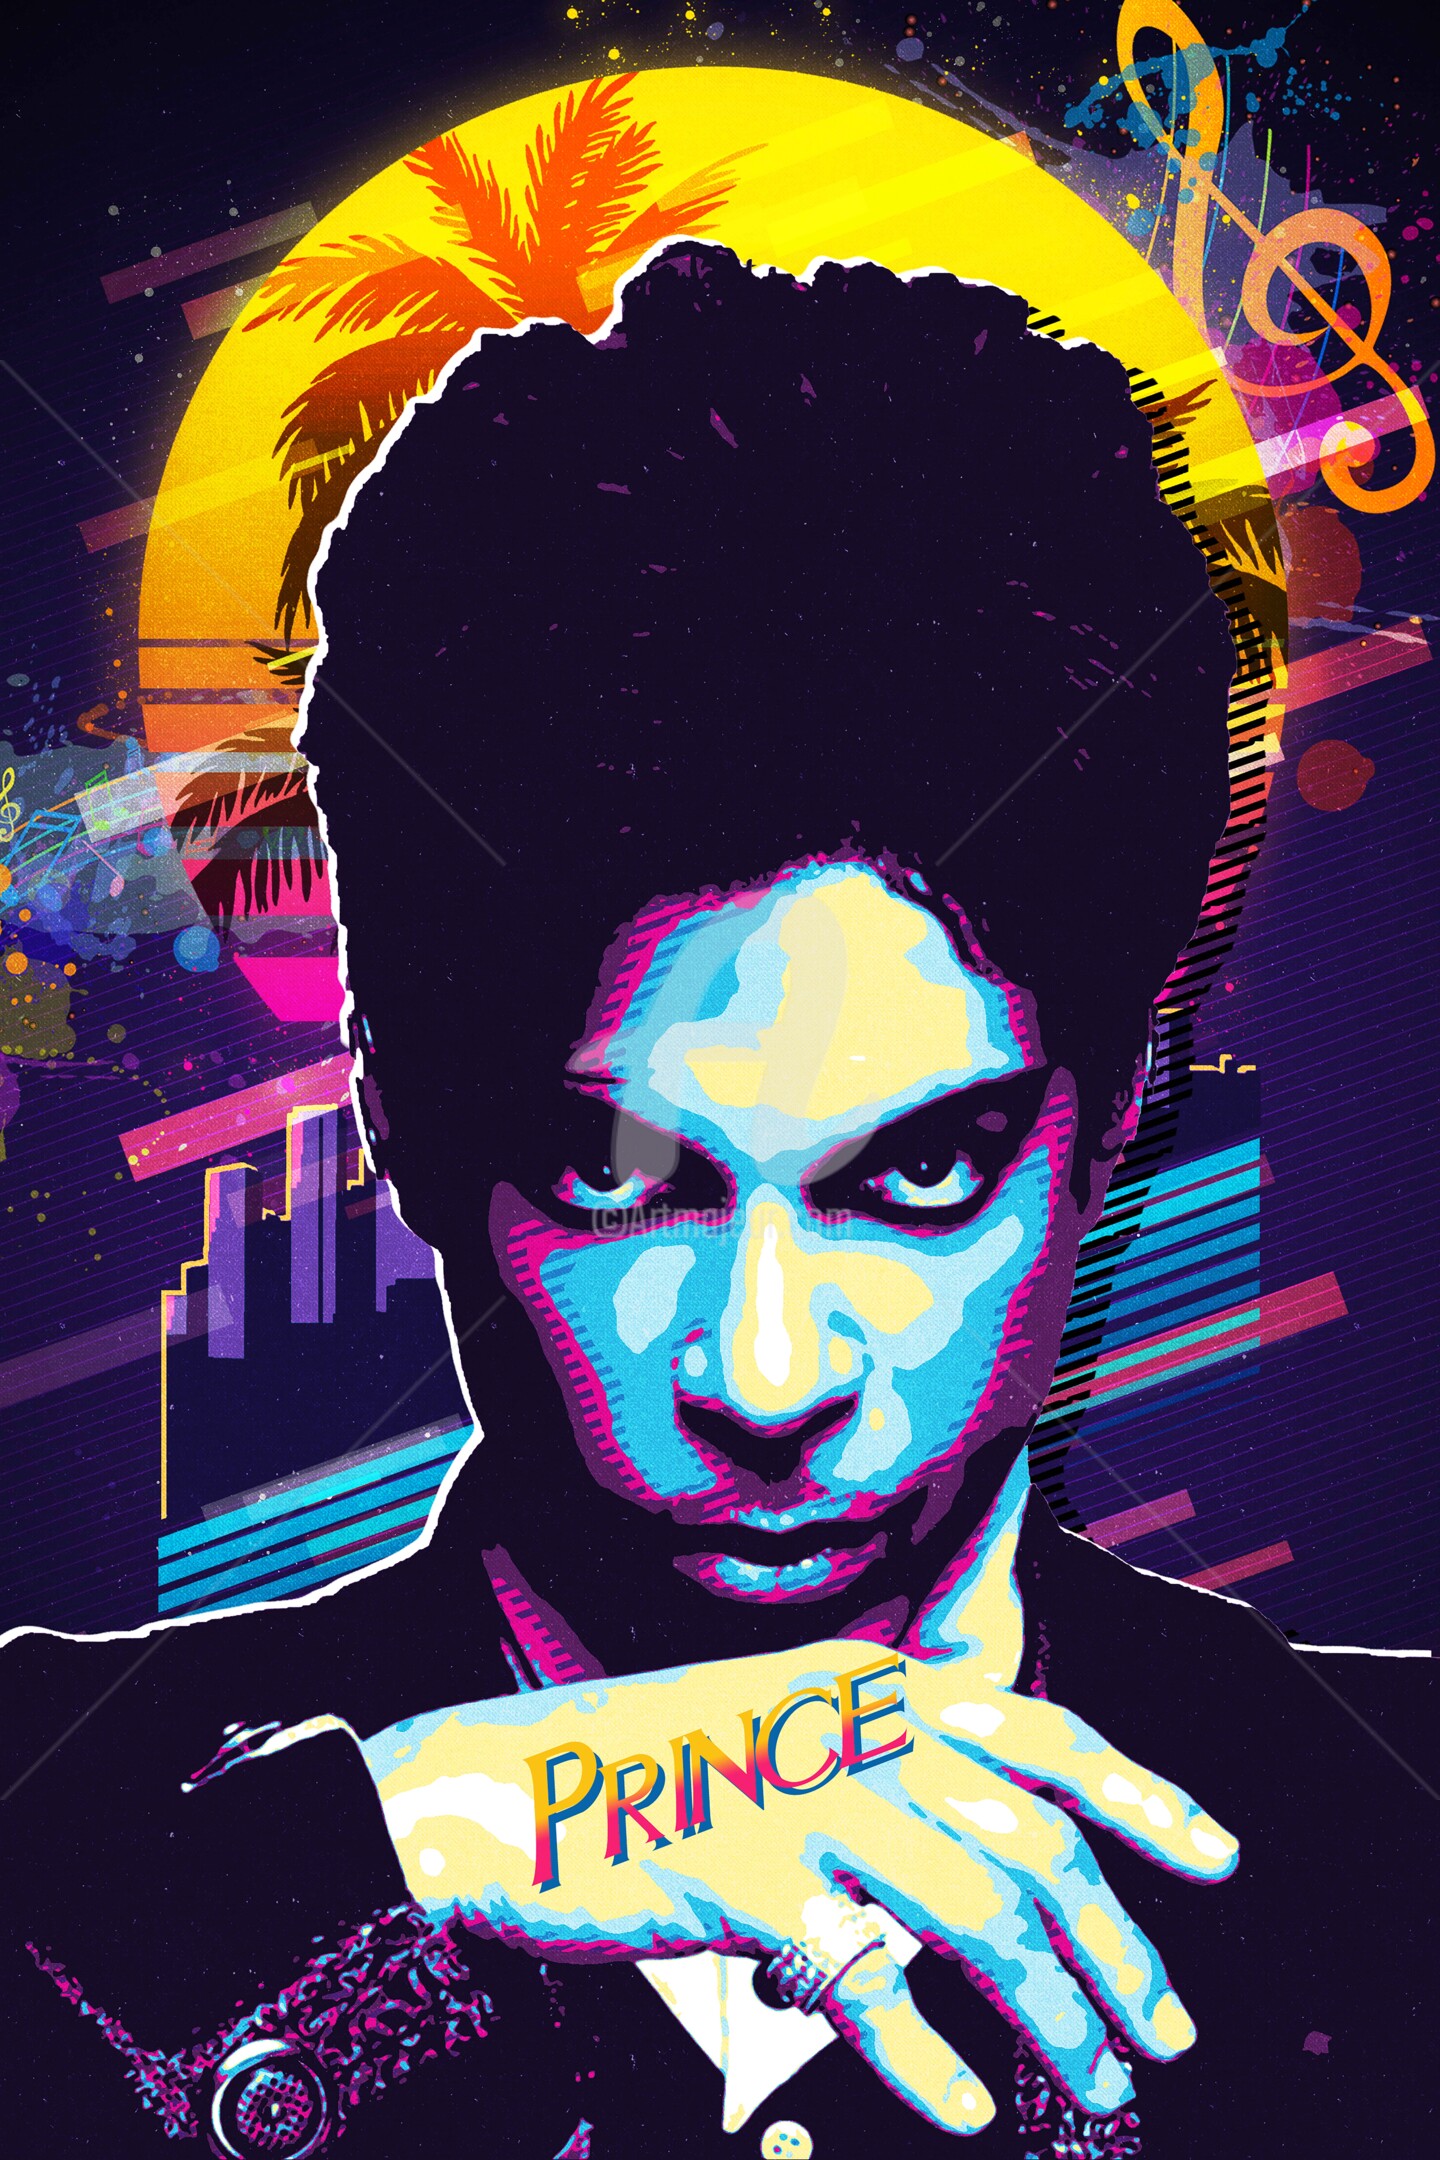 No315 Prince Retro, Digital Arts by Joseph Long | Artmajeur